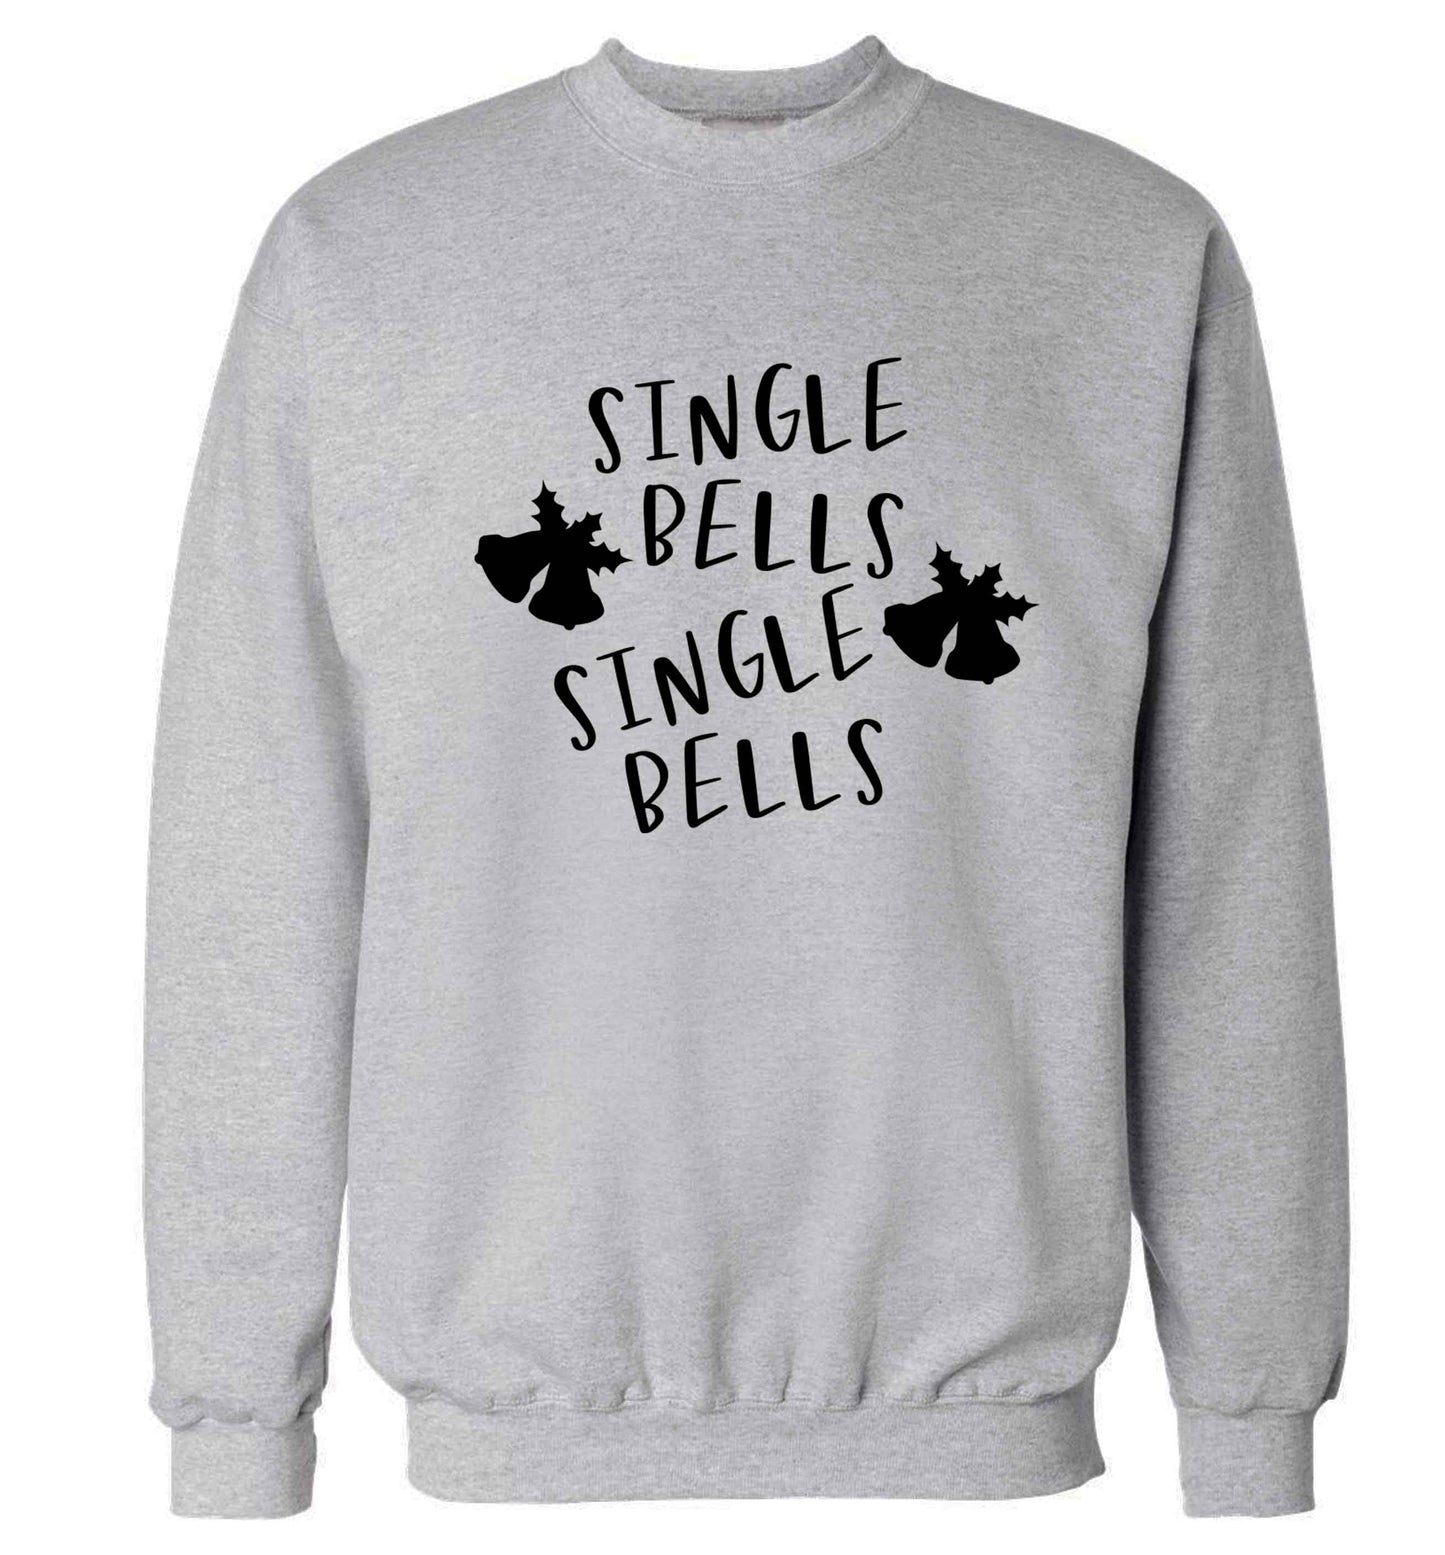 Single bells, single bells Adult's unisex grey Sweater 2XL